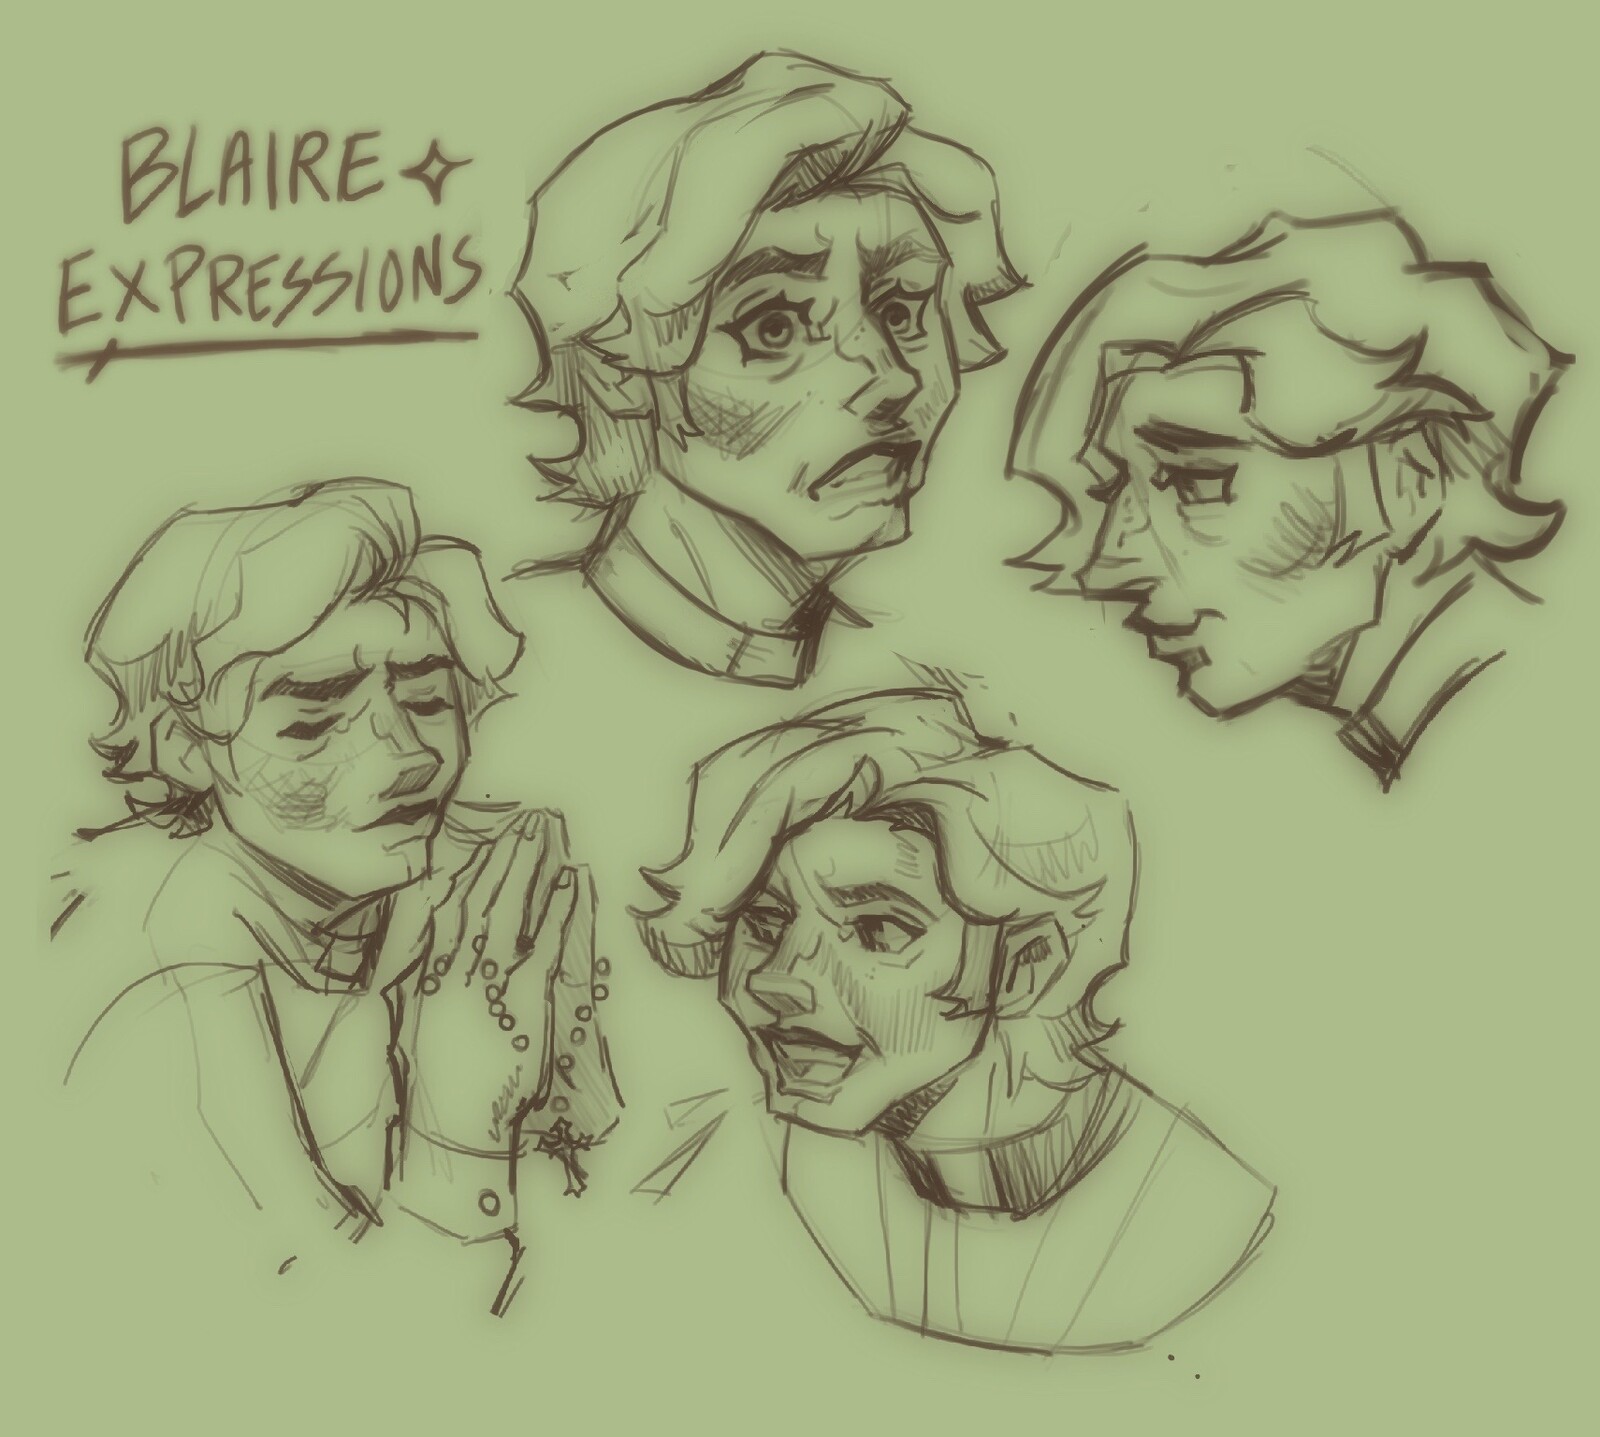 Blair expressions